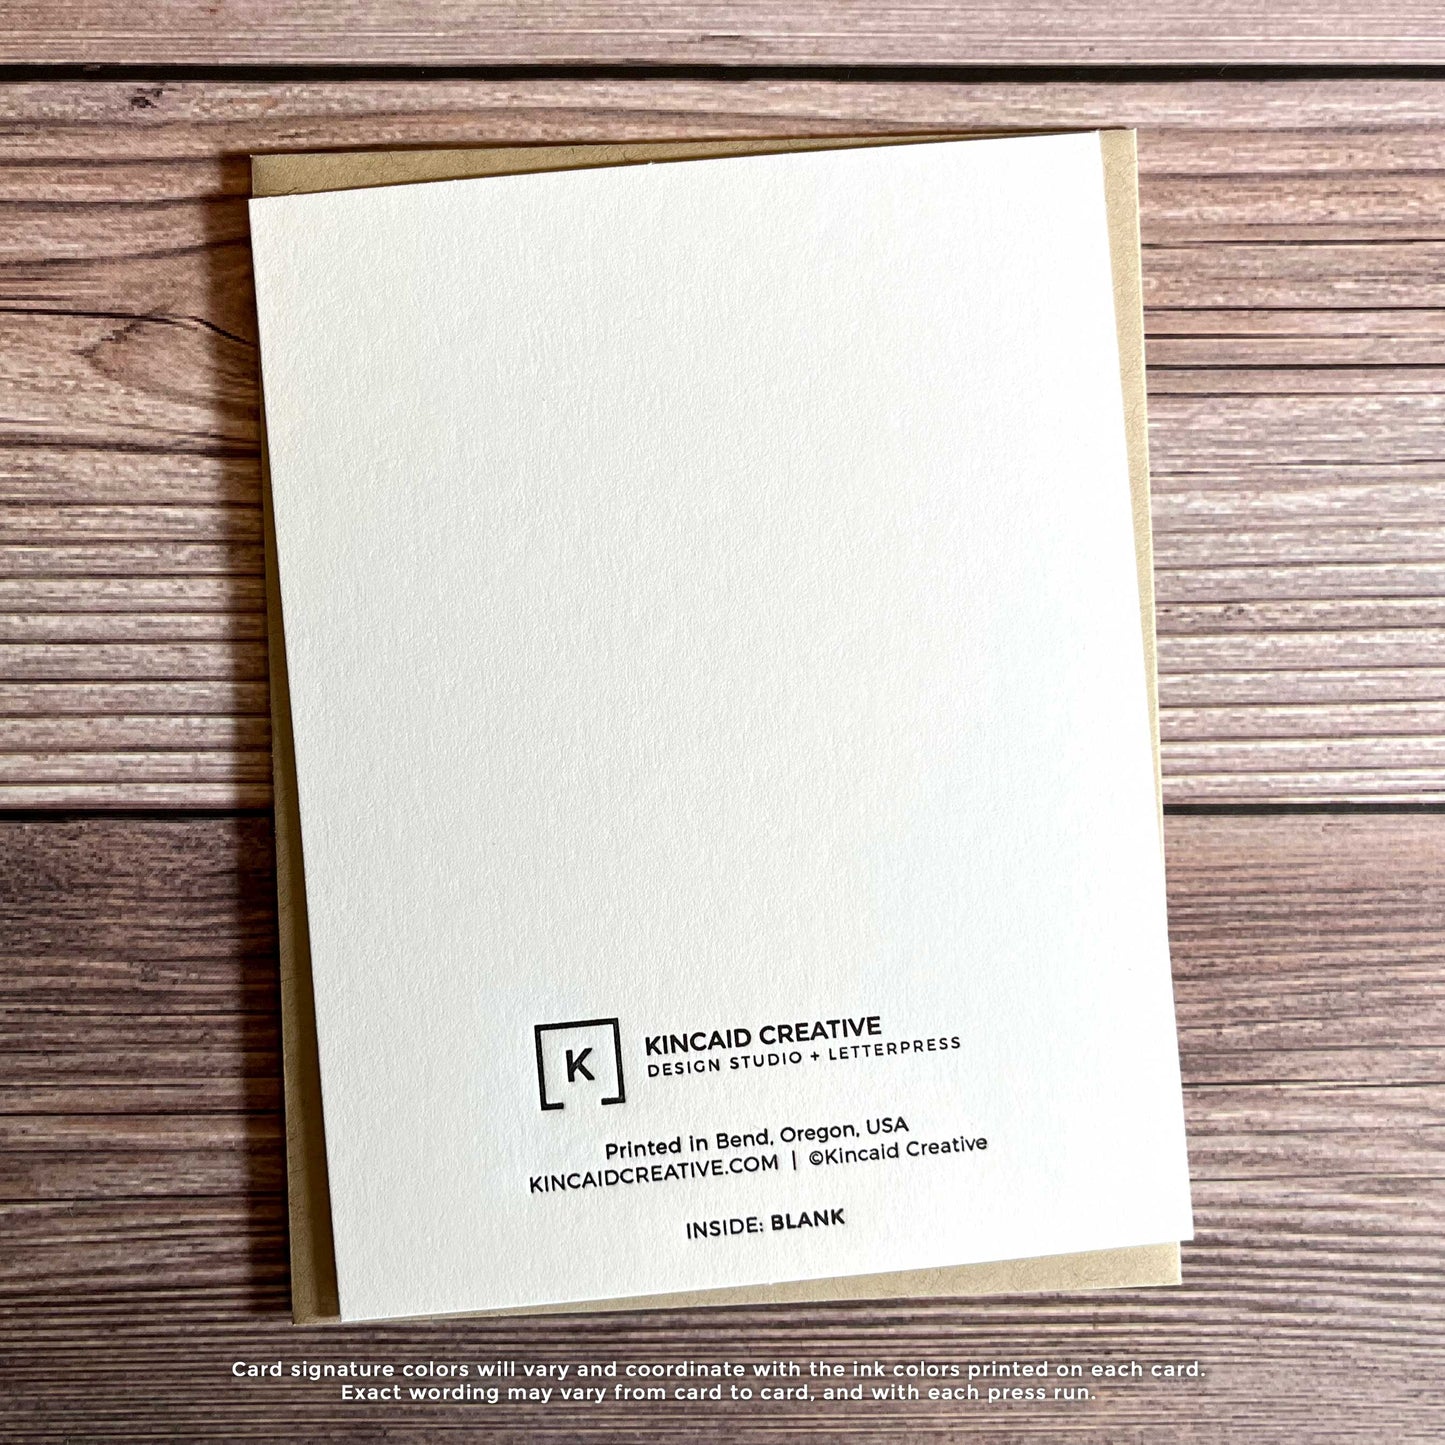 Letterpress encouragement card, blank inside, back view of card, Kincaid Creative Design and Letterpress Studio, Bend, Oregon